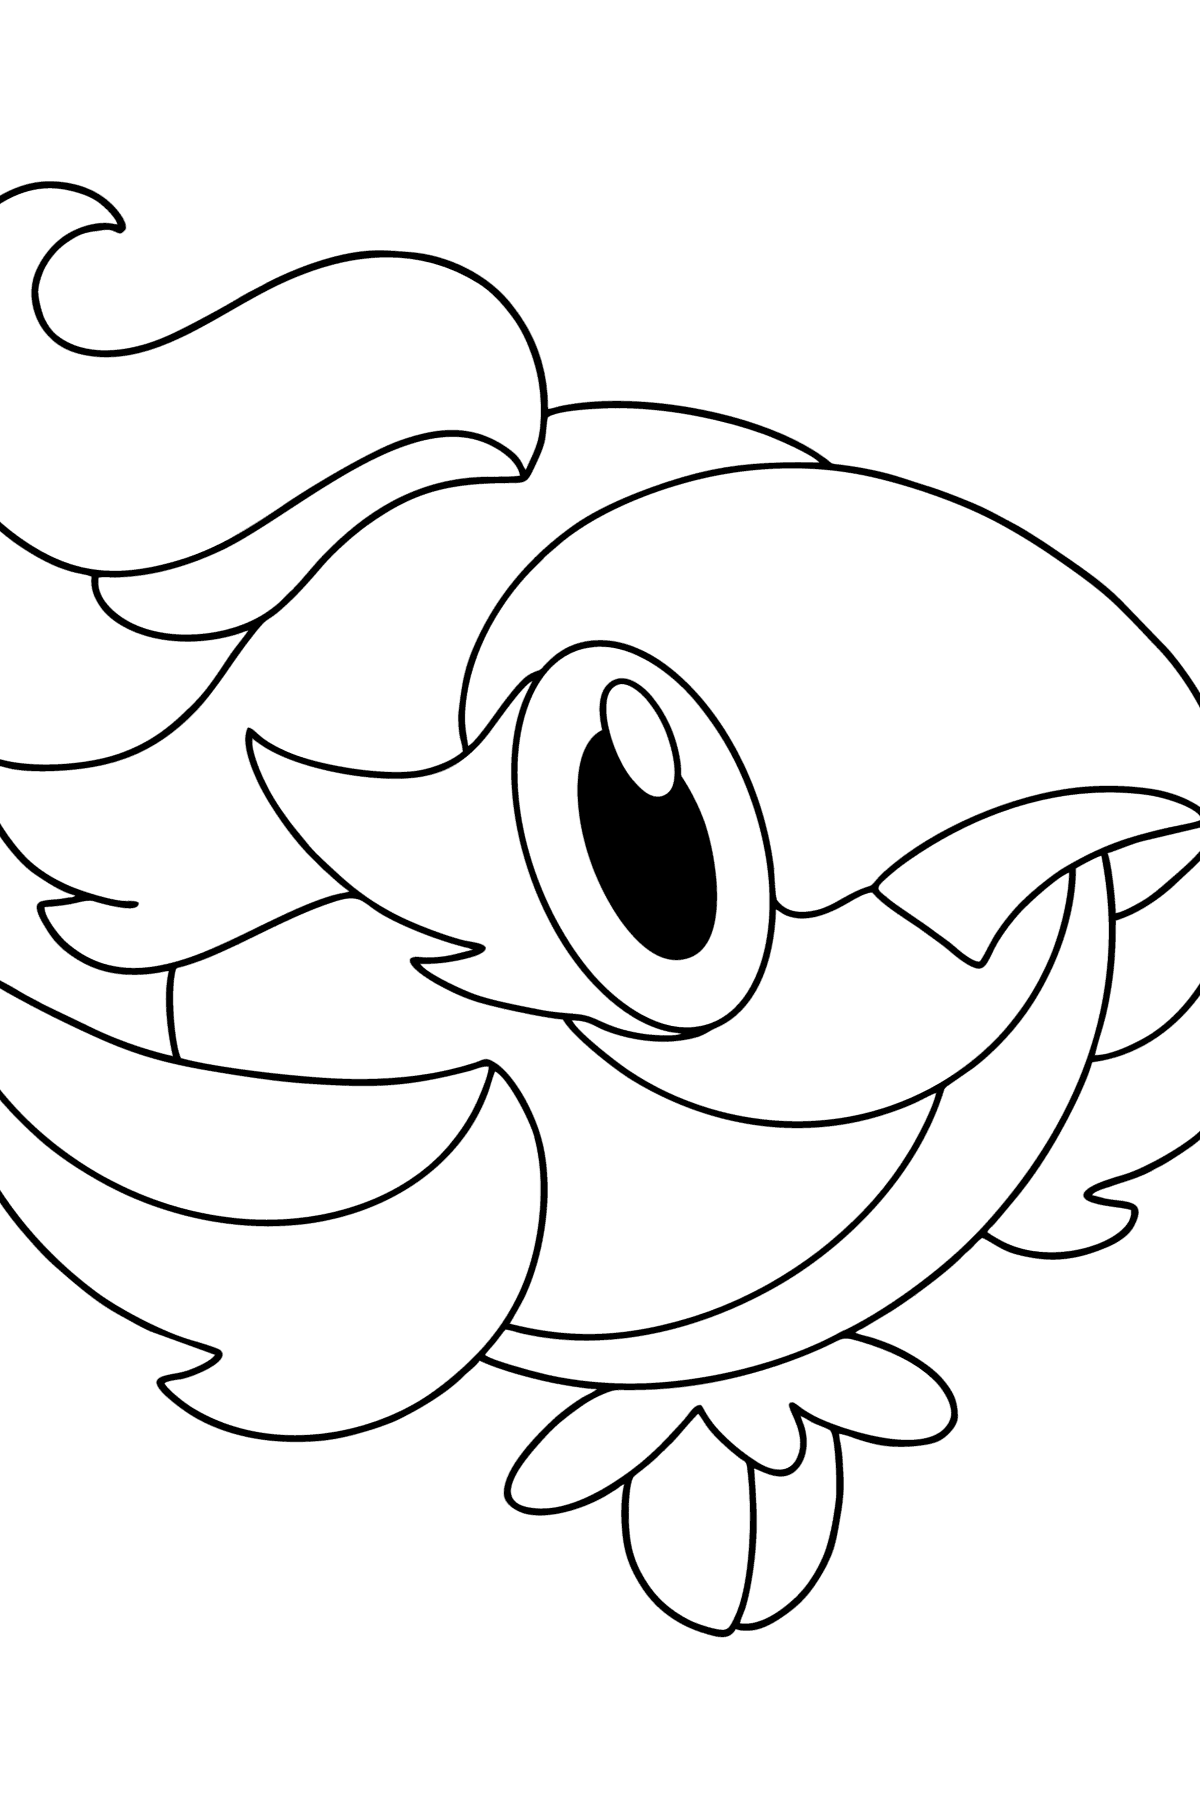 Tegning til fargelegging Pokémon XY Spritzee - Tegninger til fargelegging for barn